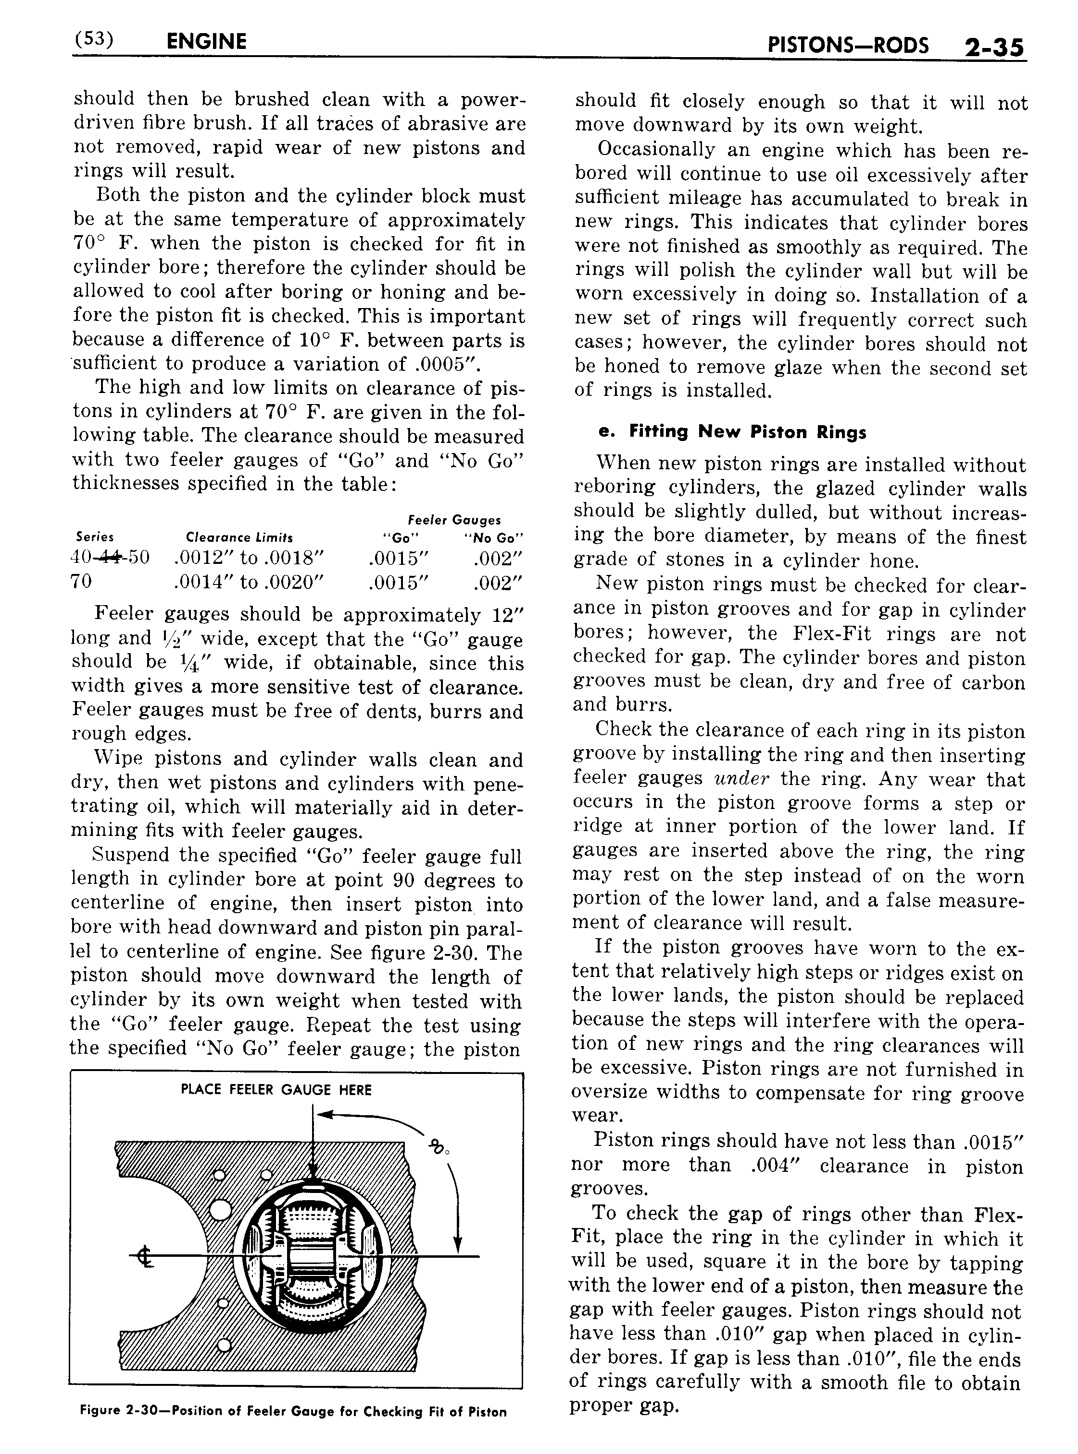 n_03 1951 Buick Shop Manual - Engine-035-035.jpg